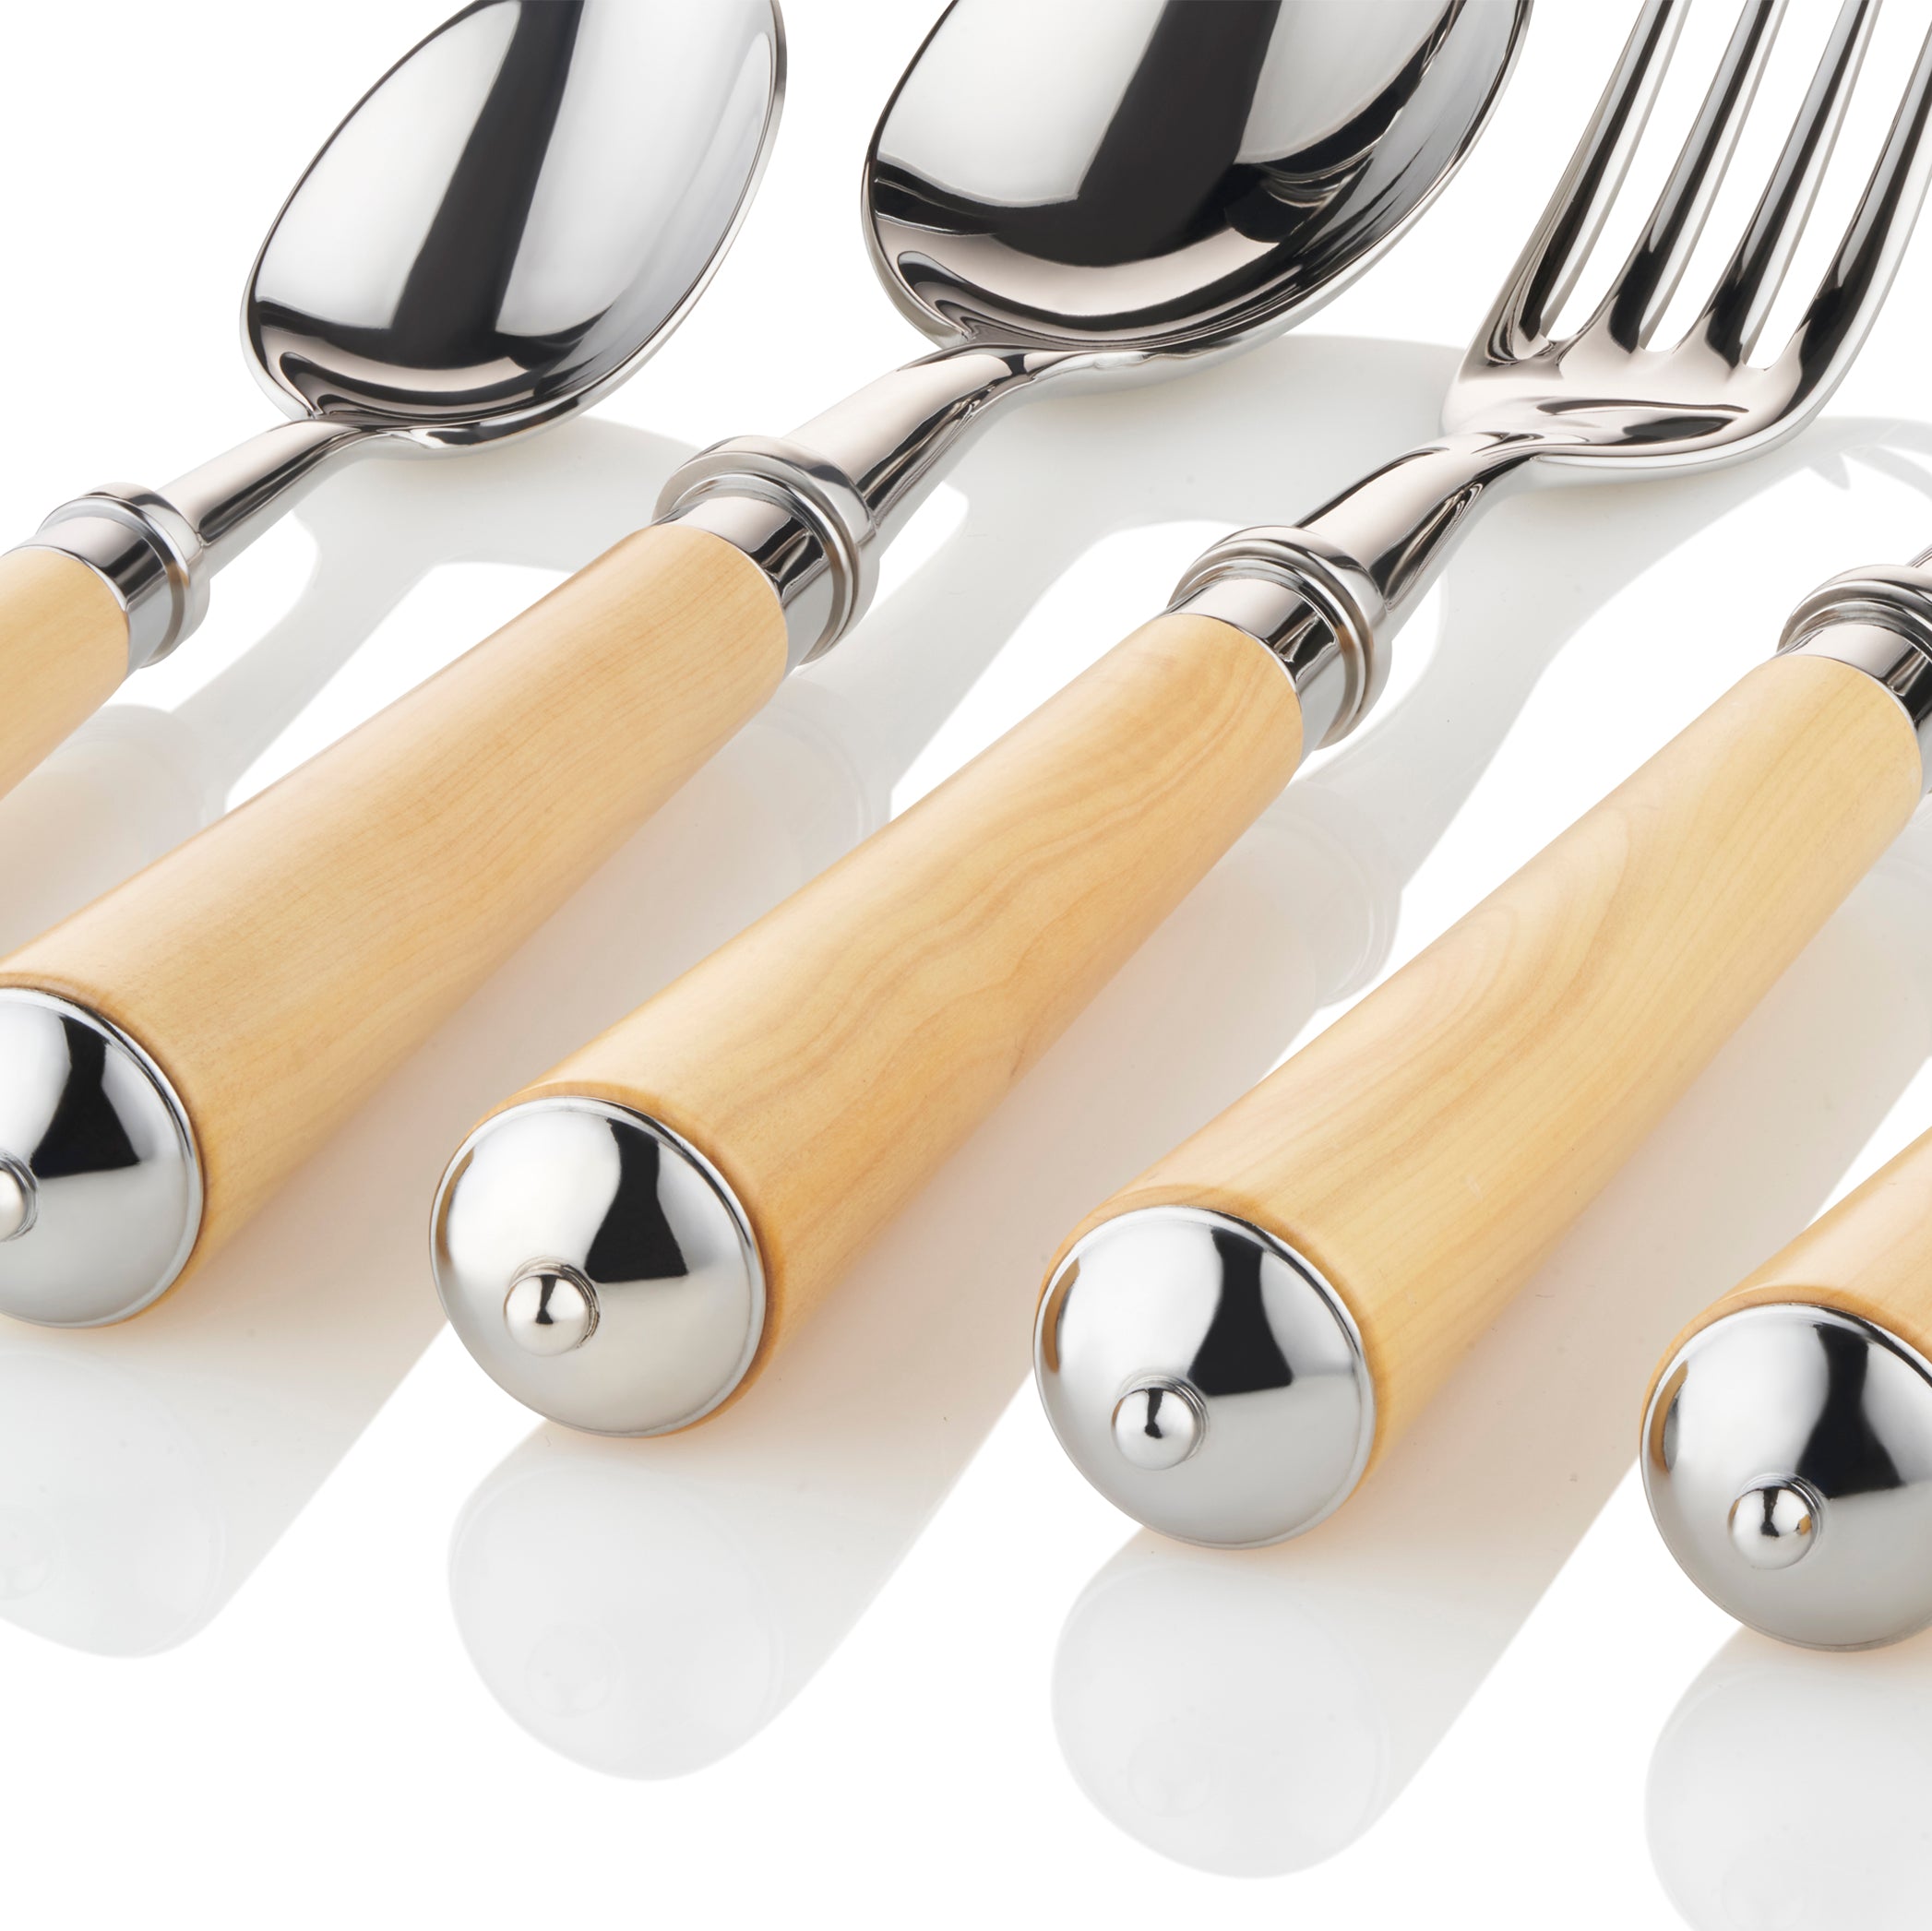 Julia Boxwood & Stainless Steel 7 Piece Cutlery Set